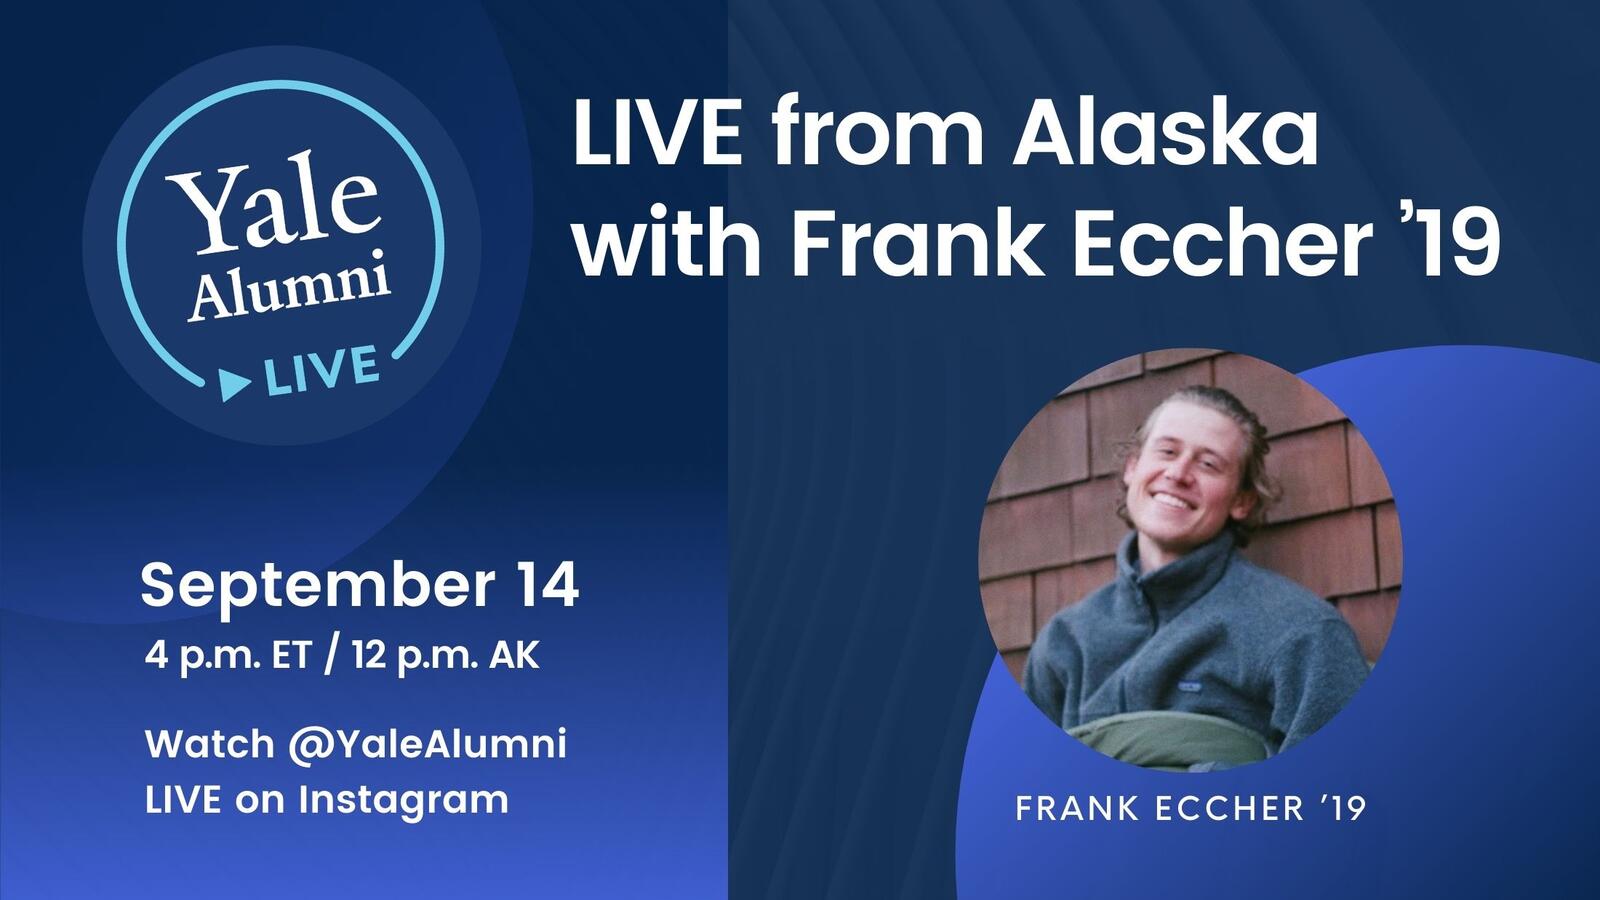 Yale Alumni LIVE: Frank Eccher ’19, Live from Alaska!